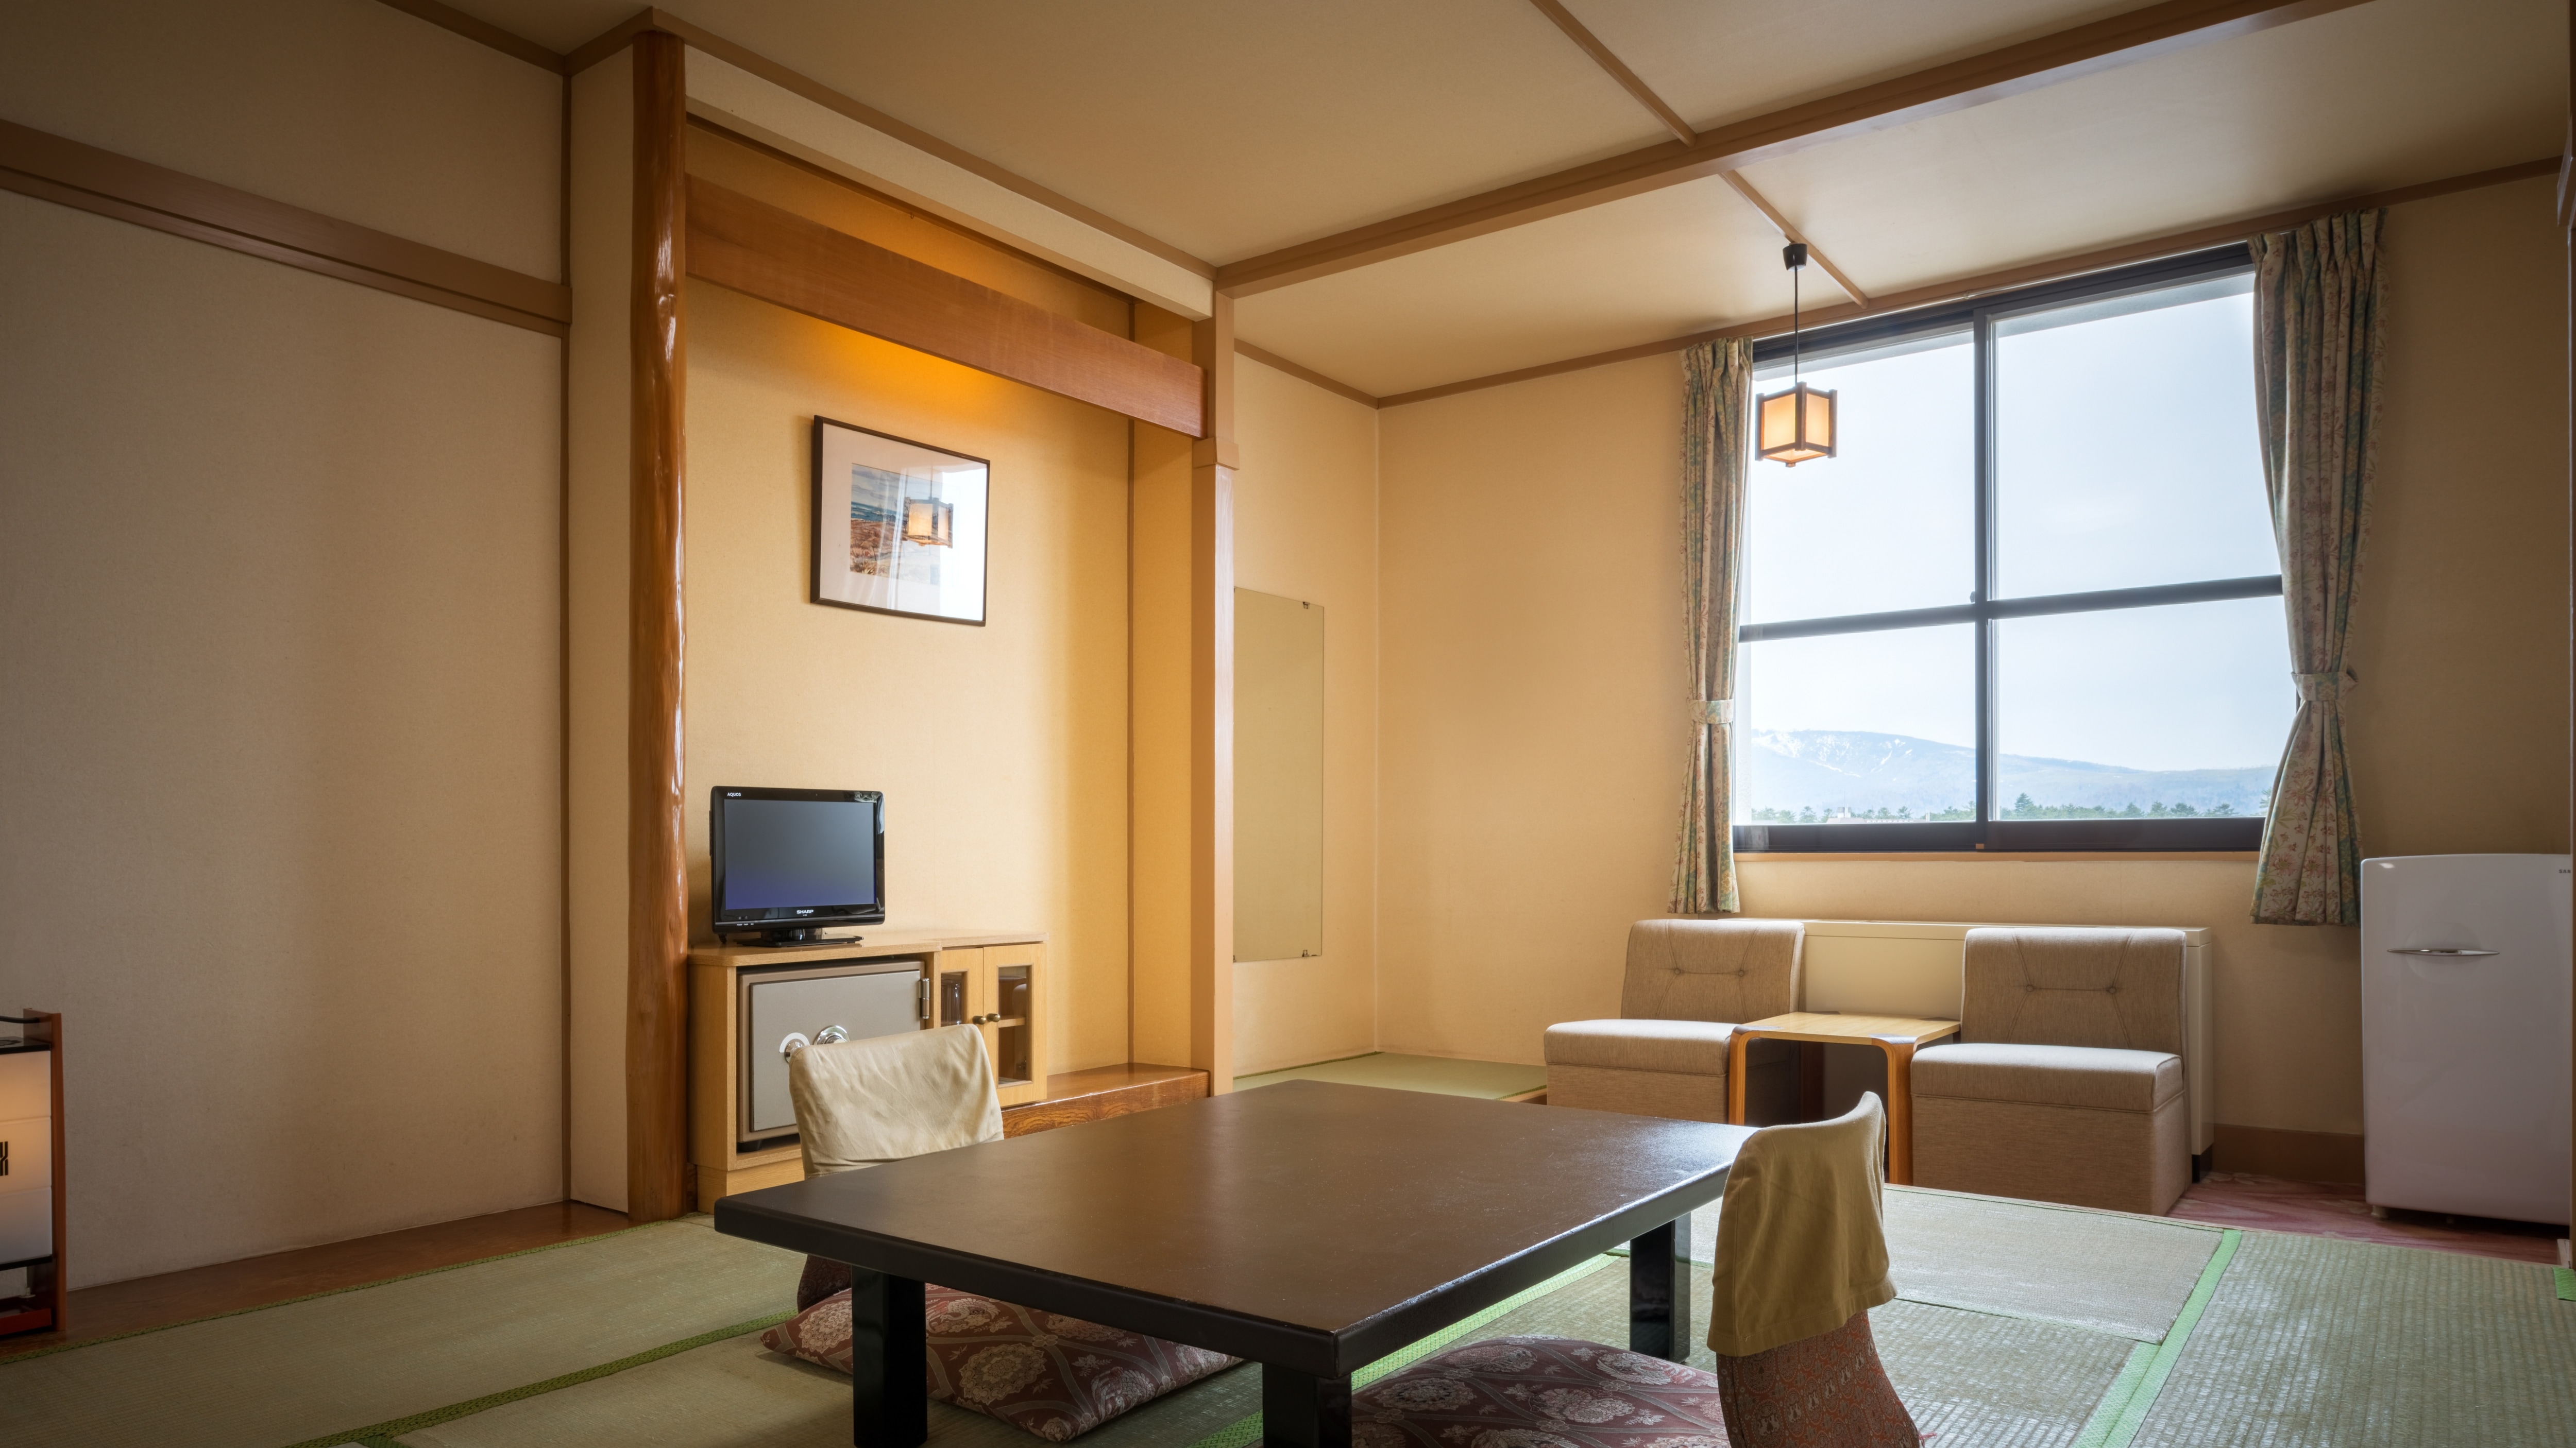 Kinkiyu Japanese-style room 8 tatami mats